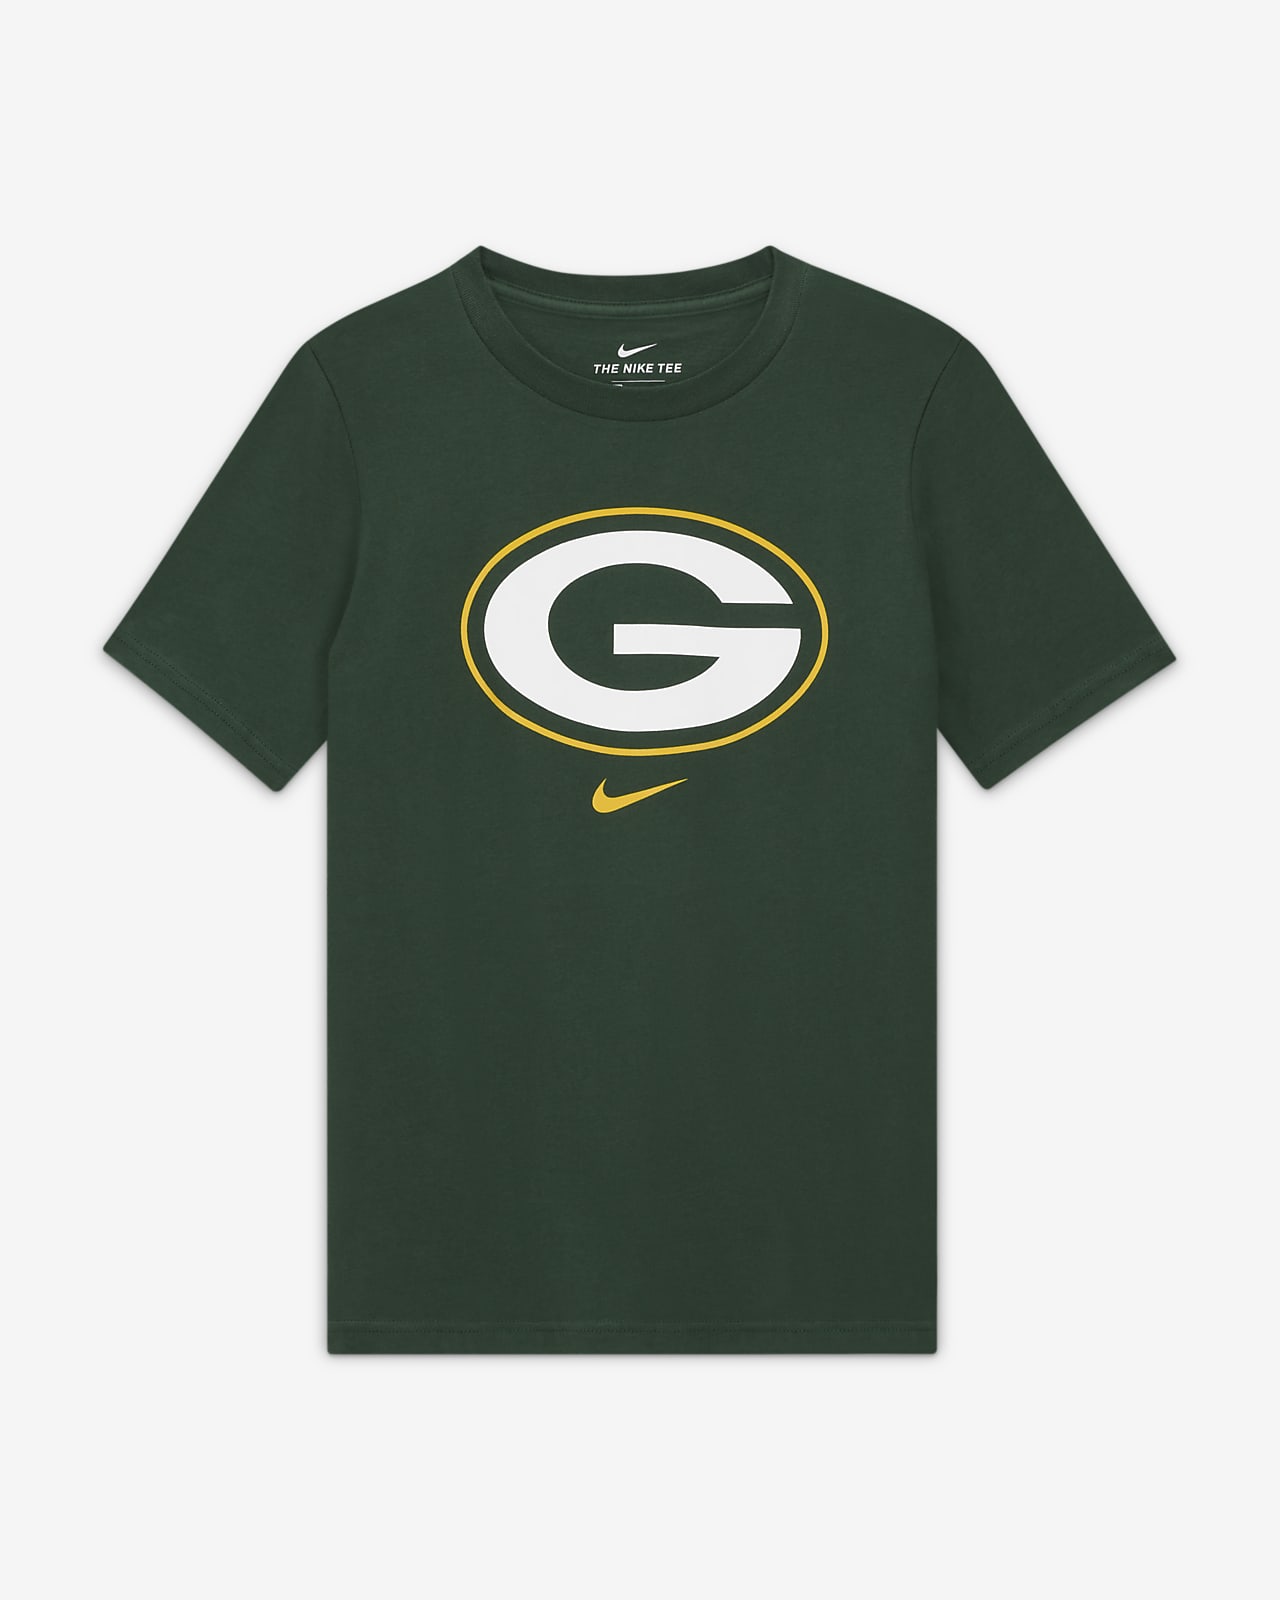 Nike (NFL Green Bay Packers) Samarreta - Nen/a